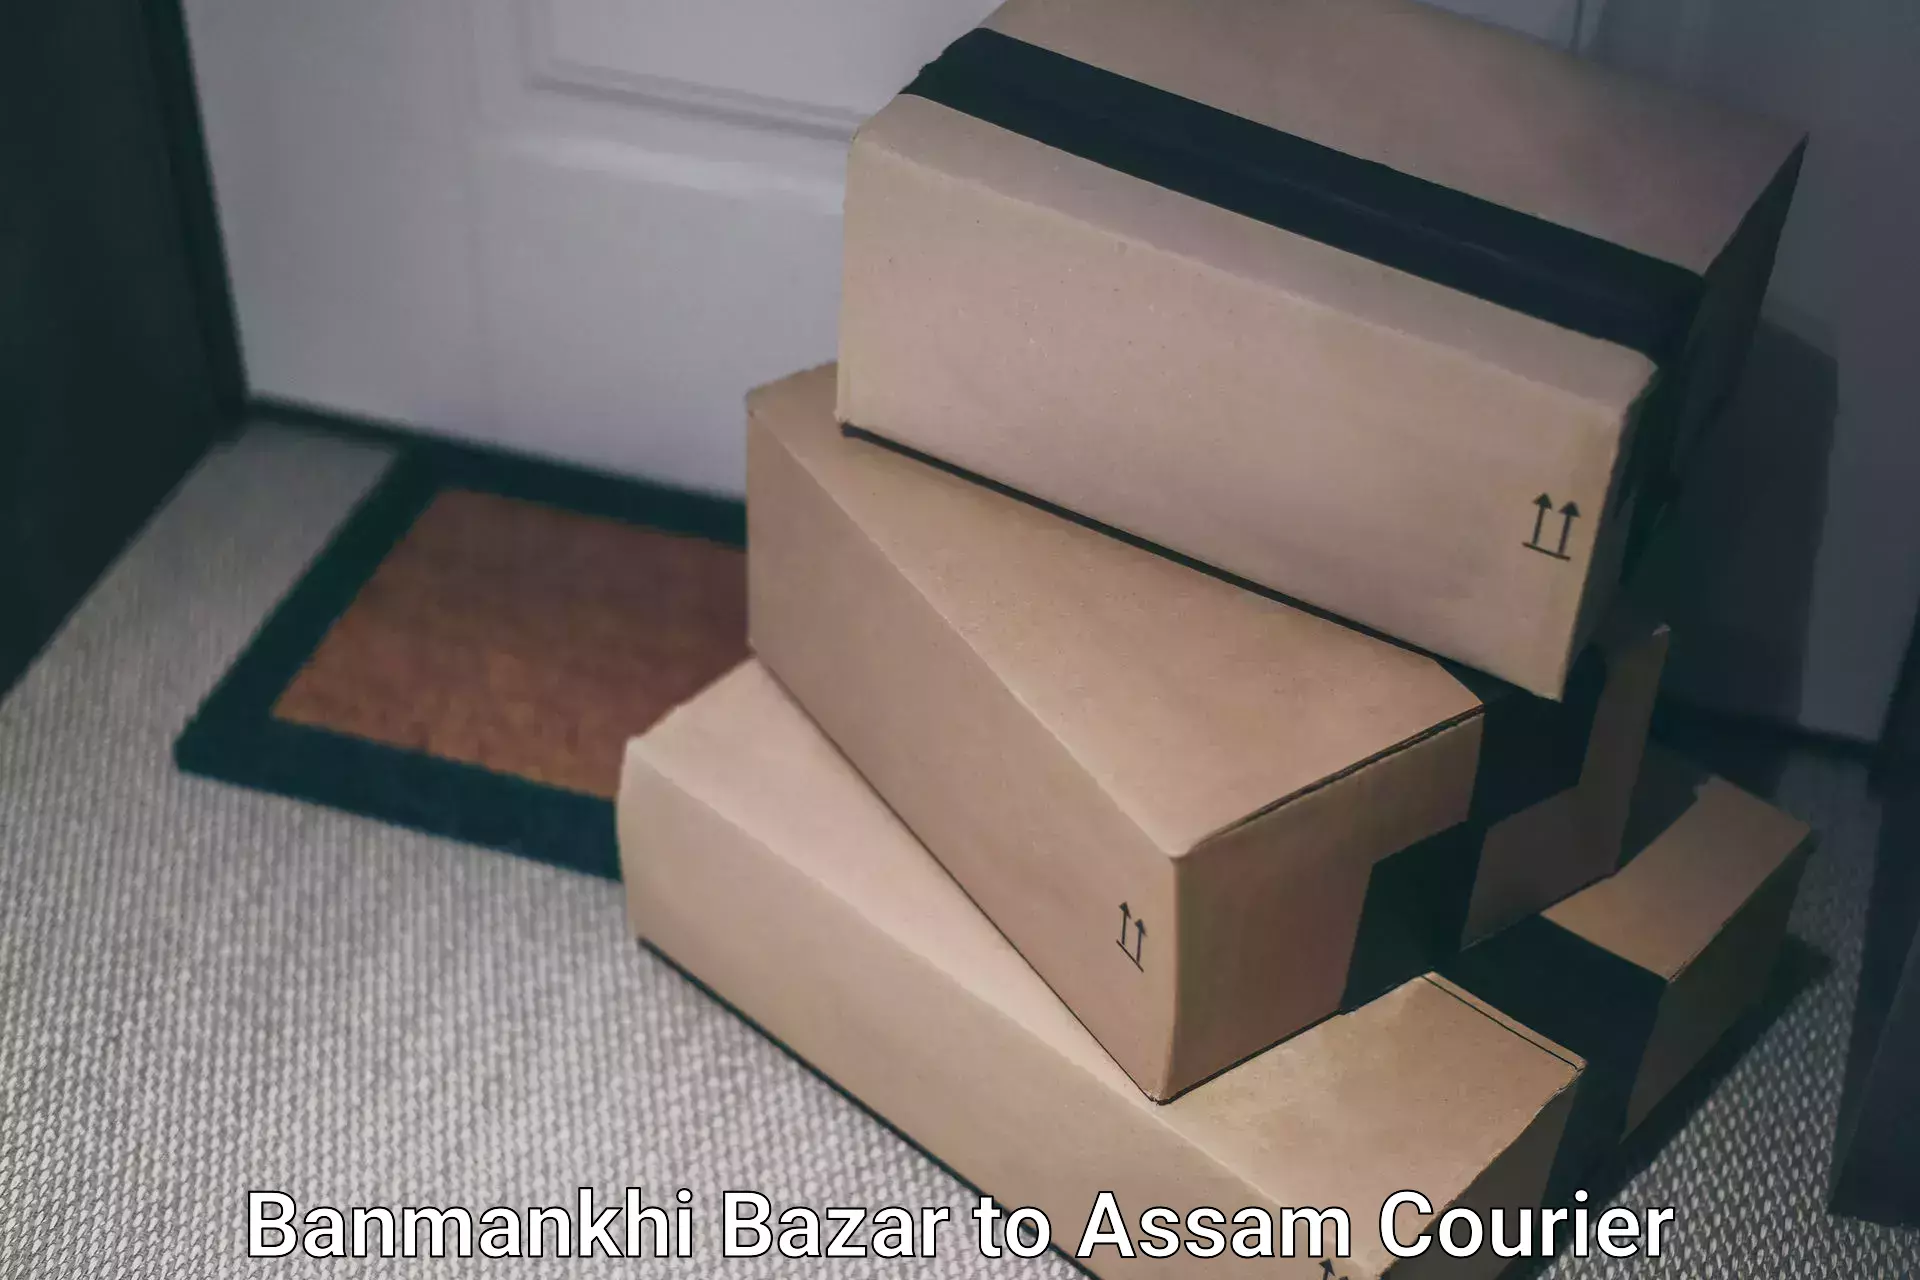 Efficient parcel tracking Banmankhi Bazar to Assam